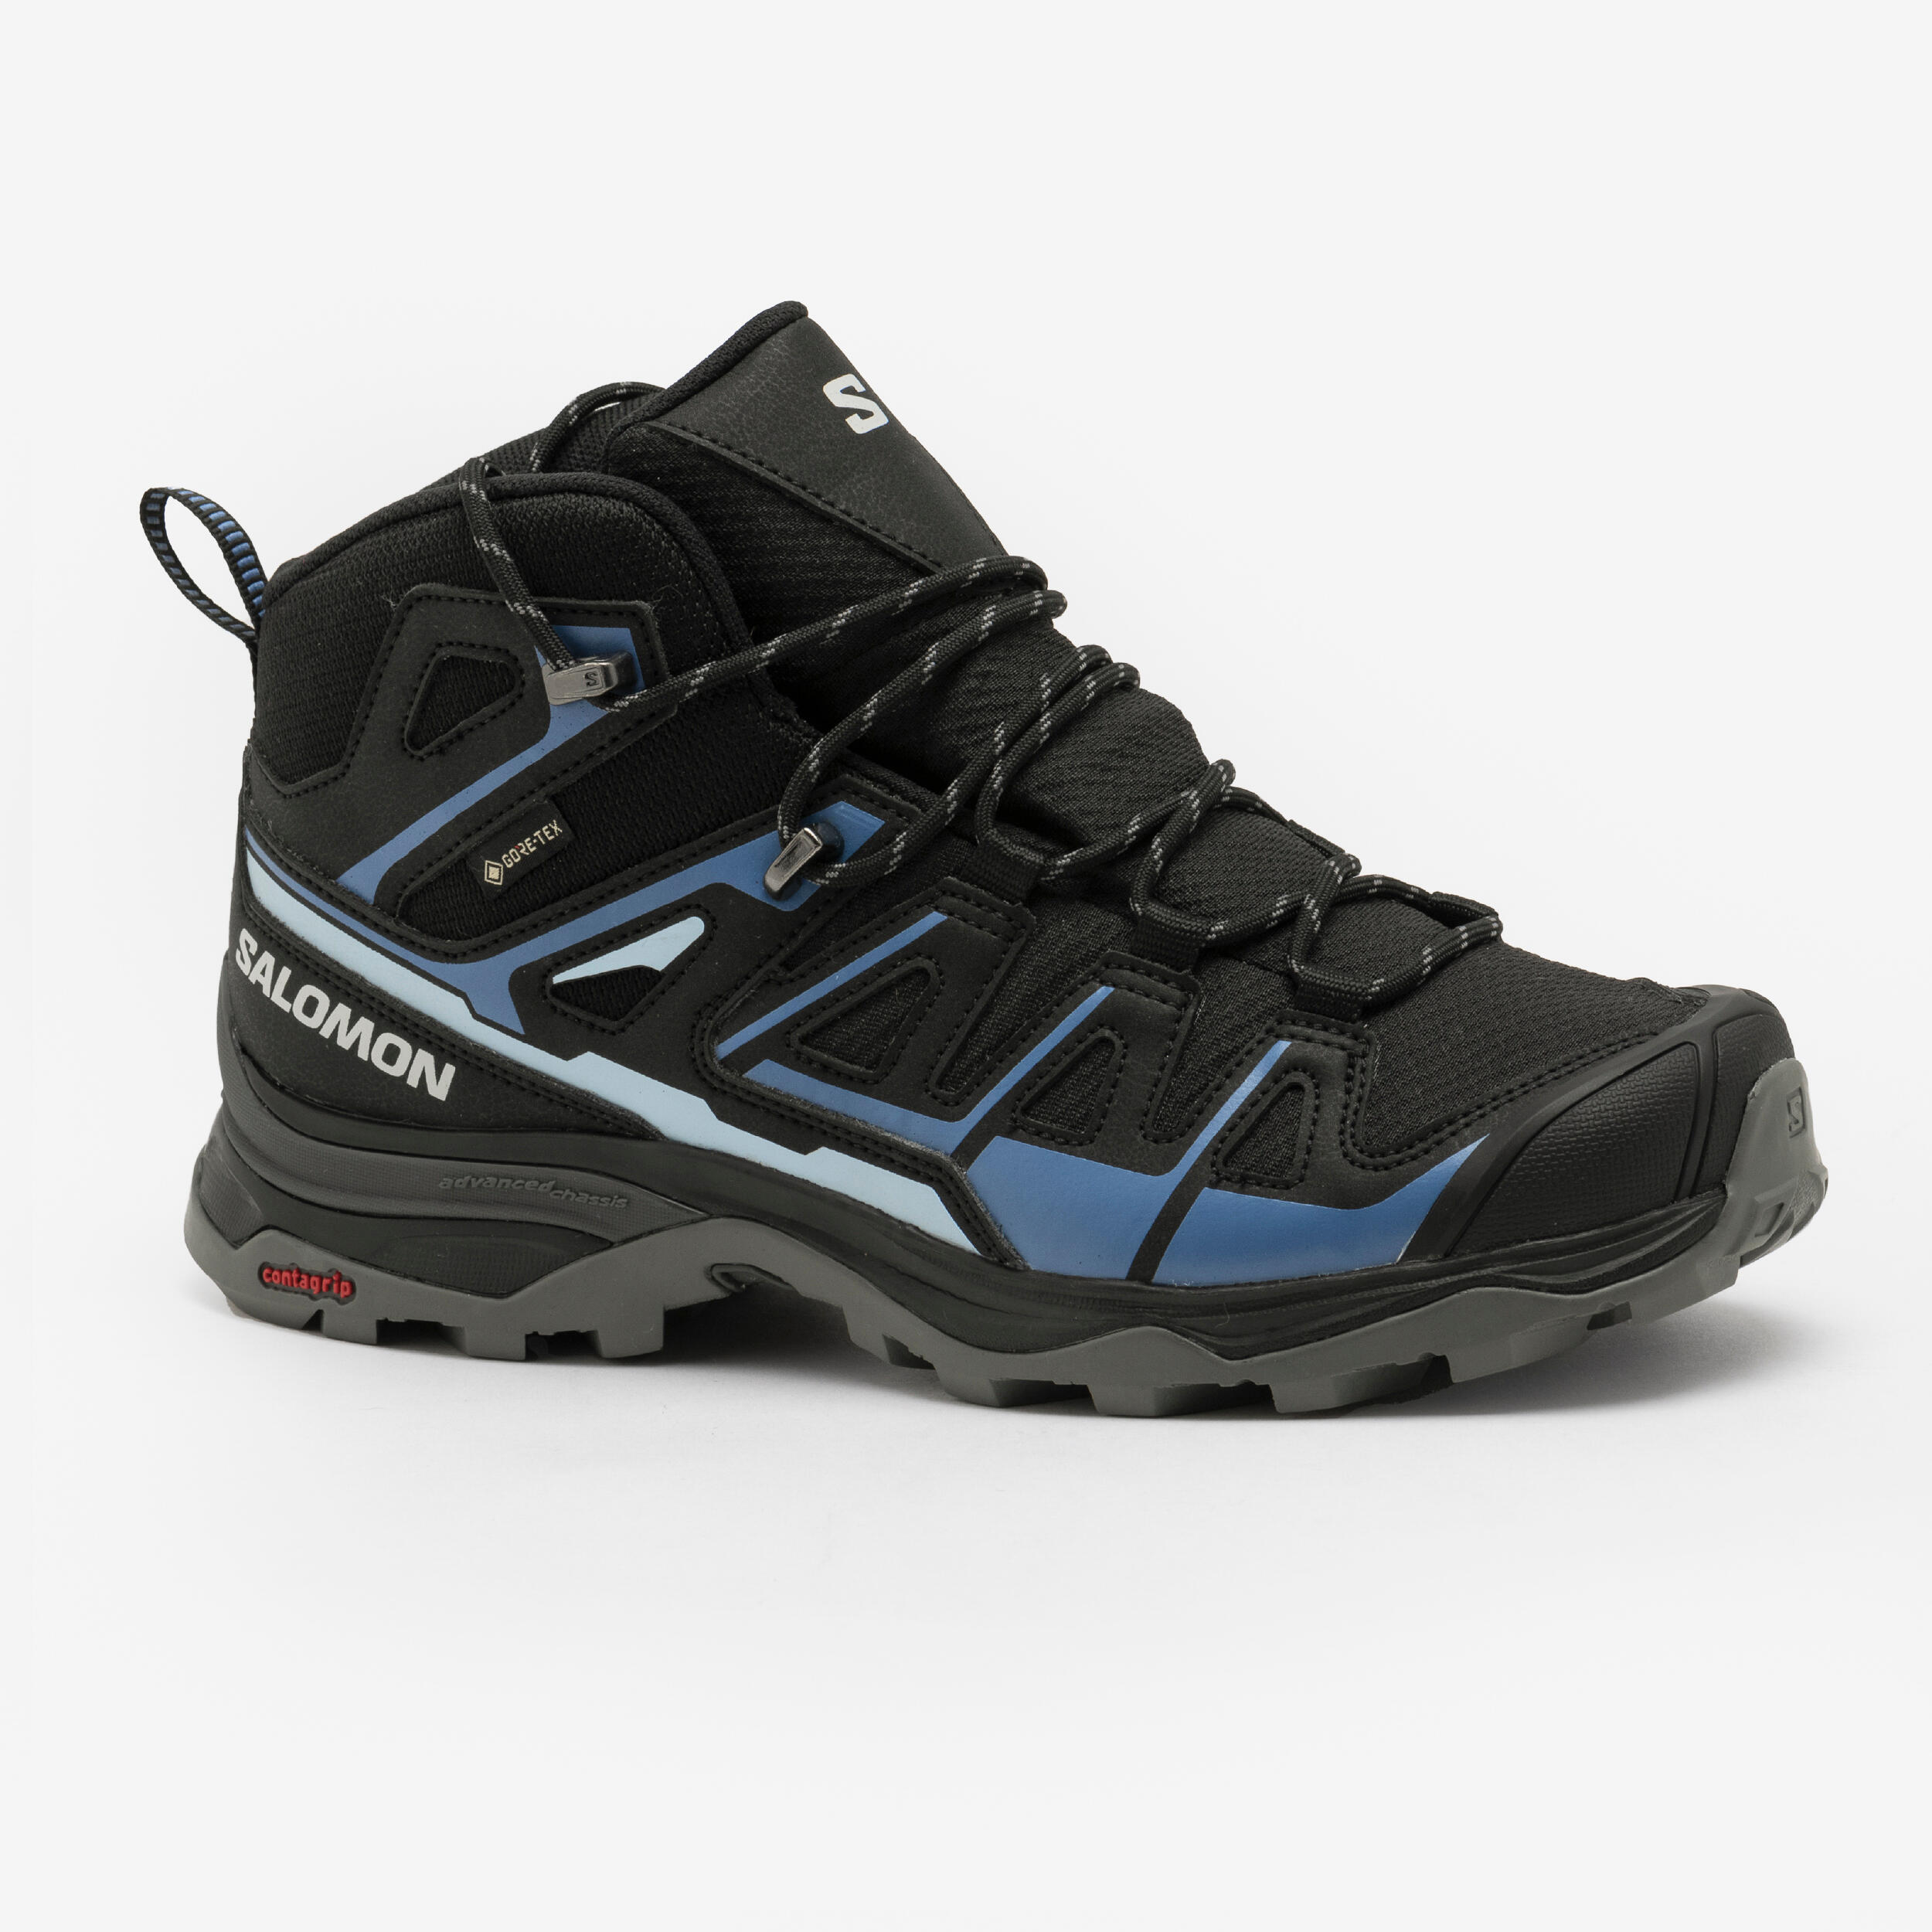 Salomon Women’s Waterproof Hiking Boots - X Ultra Pioneer 2 GTX